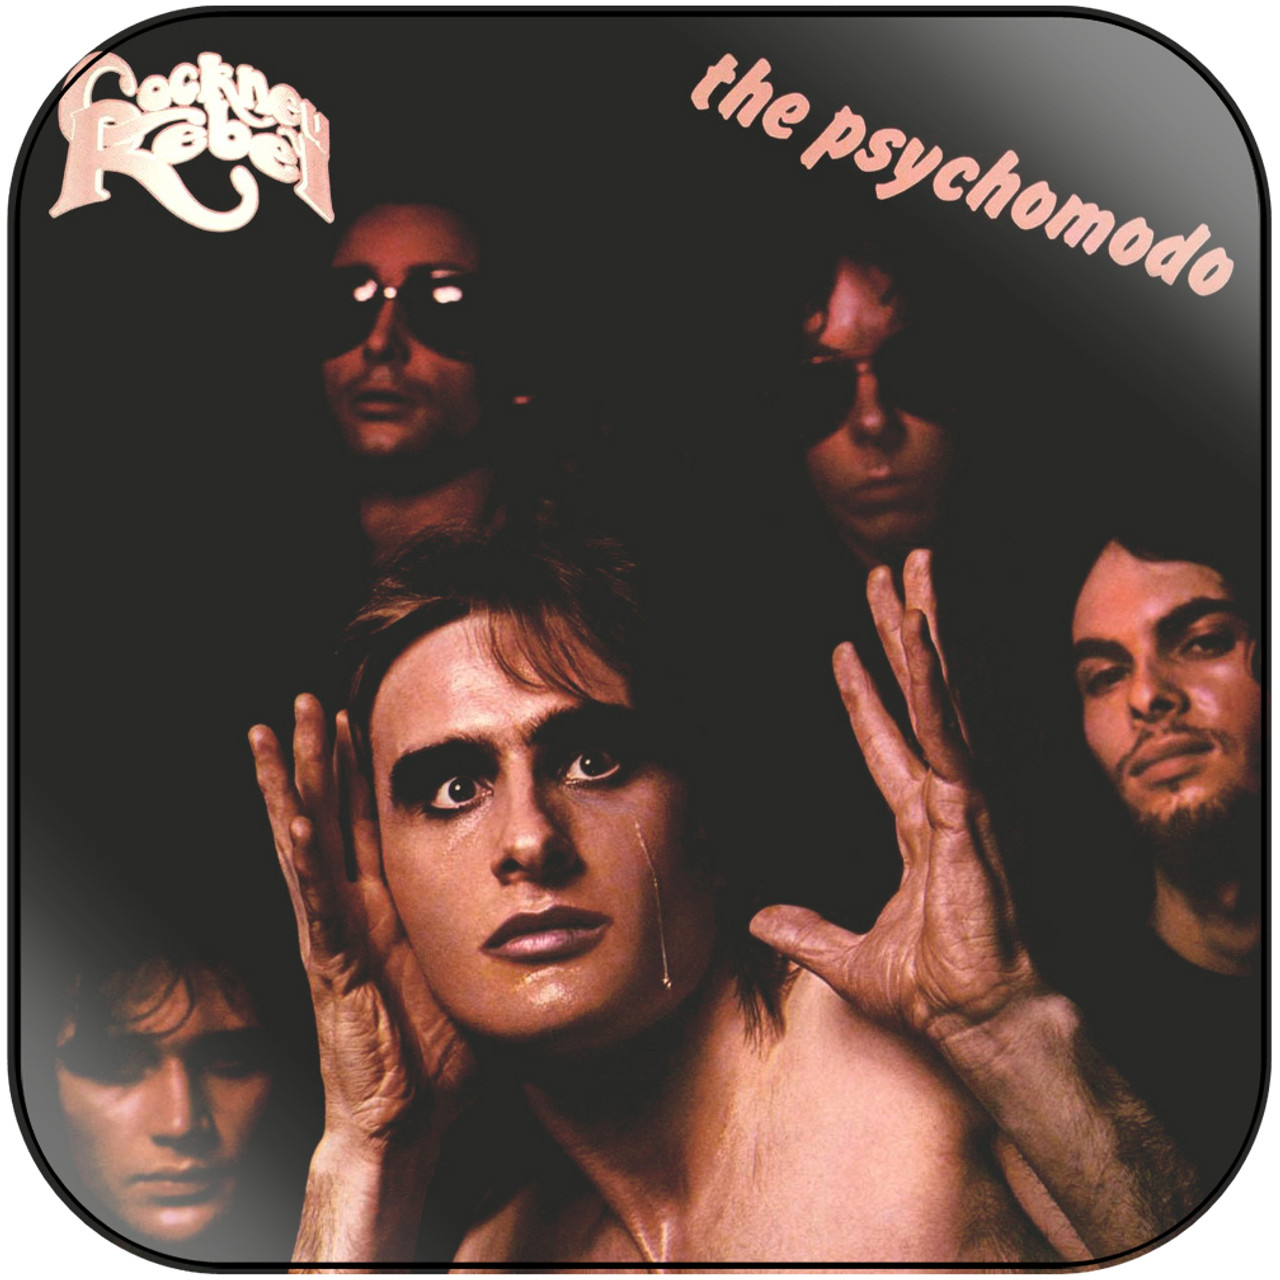 Steve Harley and Cockney Rebel - The Psychomodo Album Cover Sticker